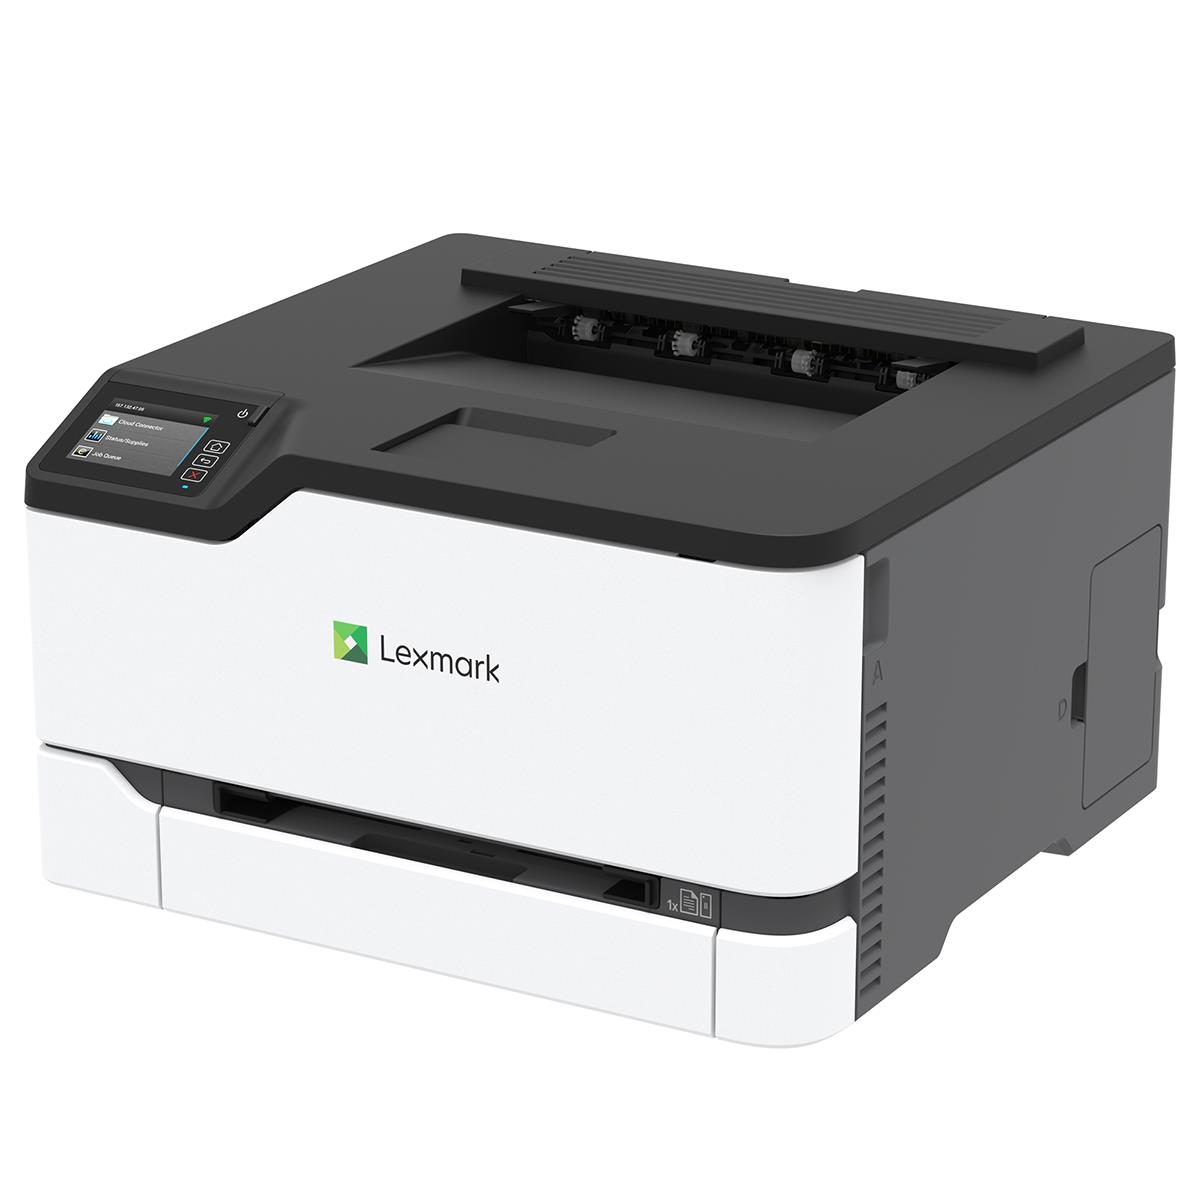 Image of Lexmark C3426dw Wireless Color Duplex Laser Printer